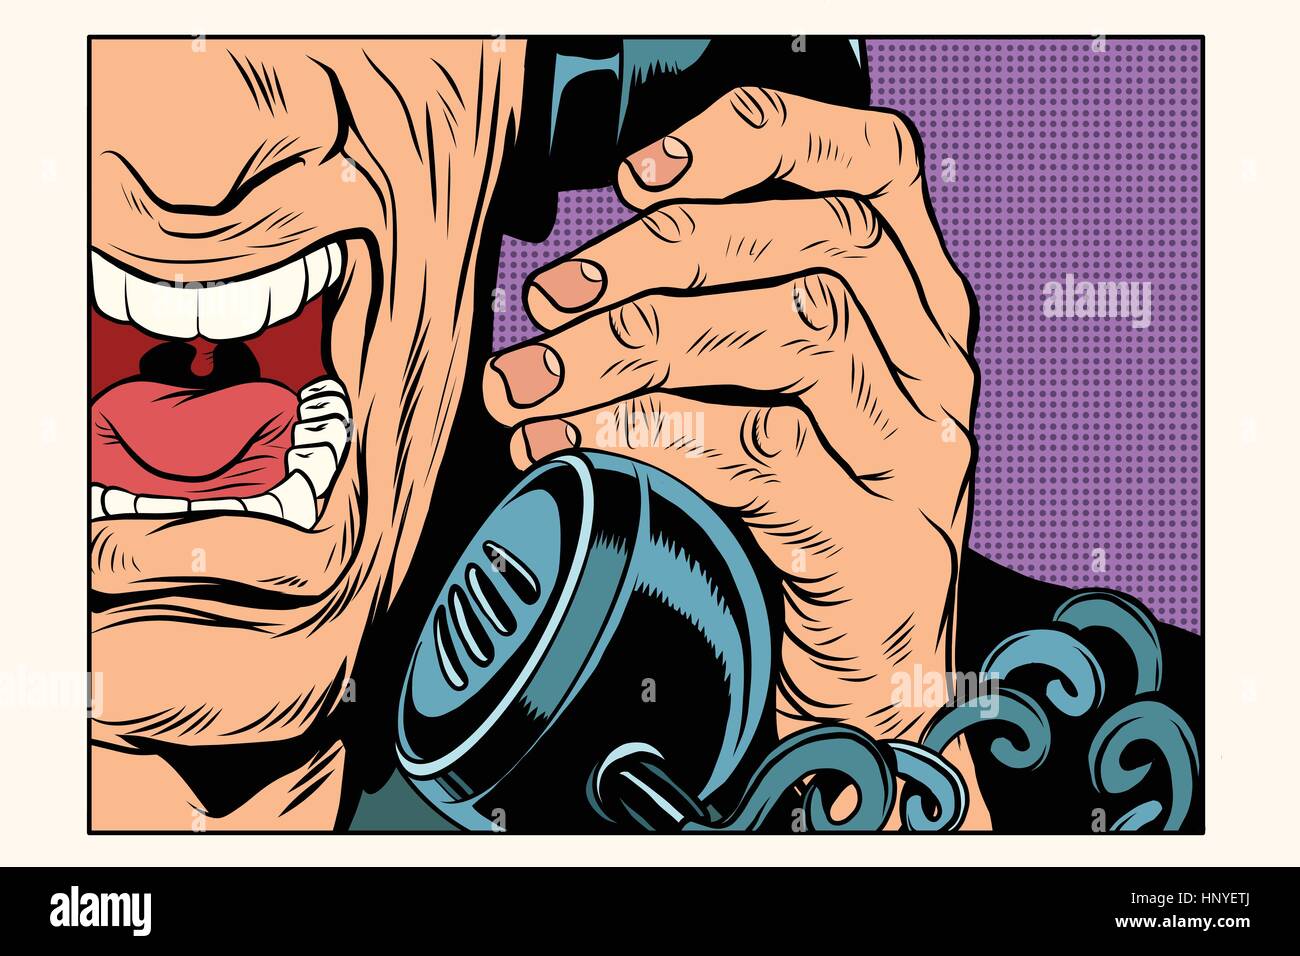 Verärgerter Mann am Telefon zu sprechen. Vintage Pop-Art-Retro-Comic-Buch-Vektor-illustration Stock Vektor